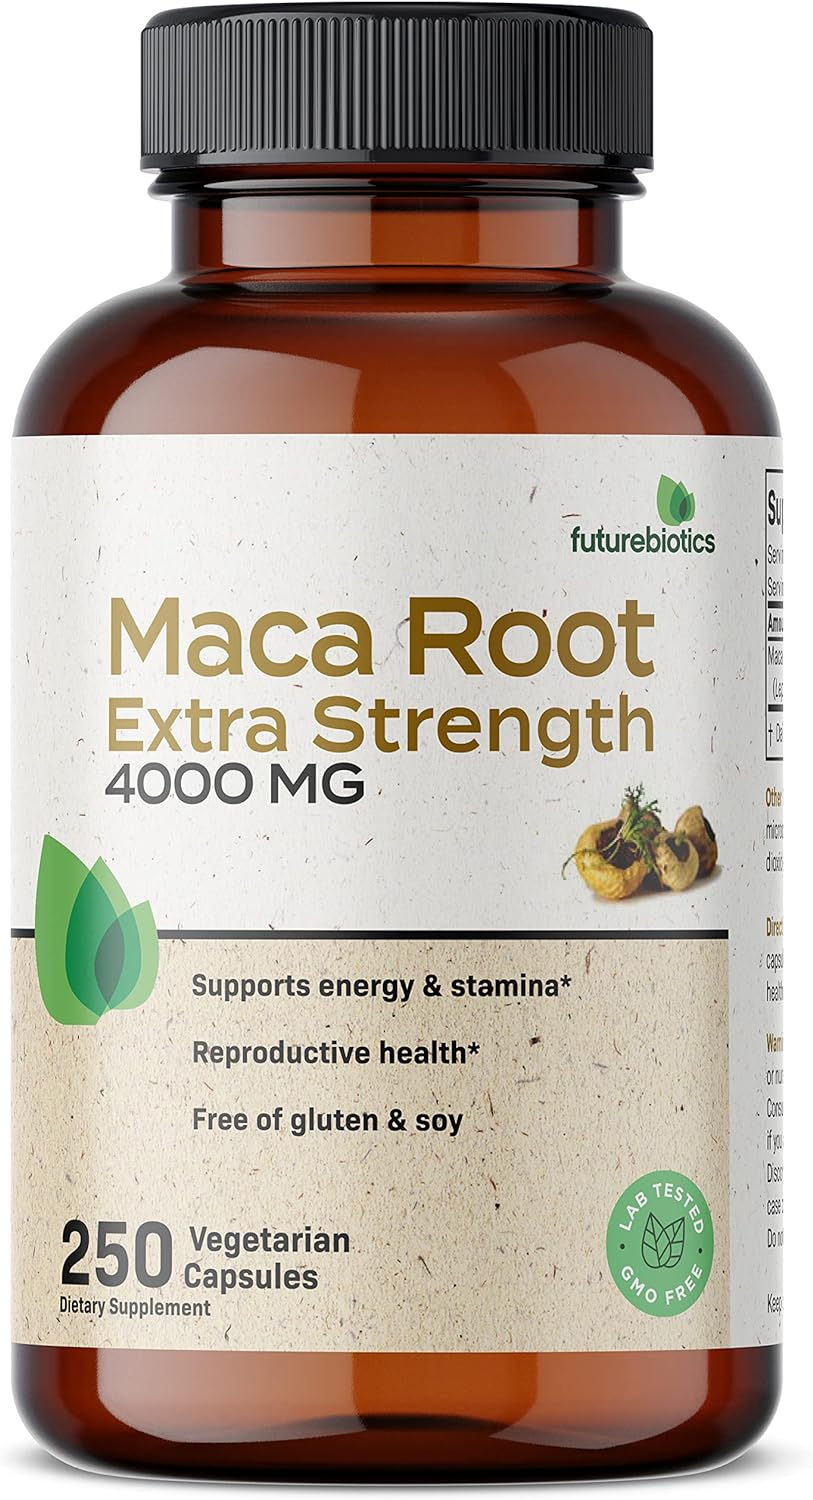 Futurebiotics Maca Root Extra Strength 4000 MG Supports Energy, Stamin